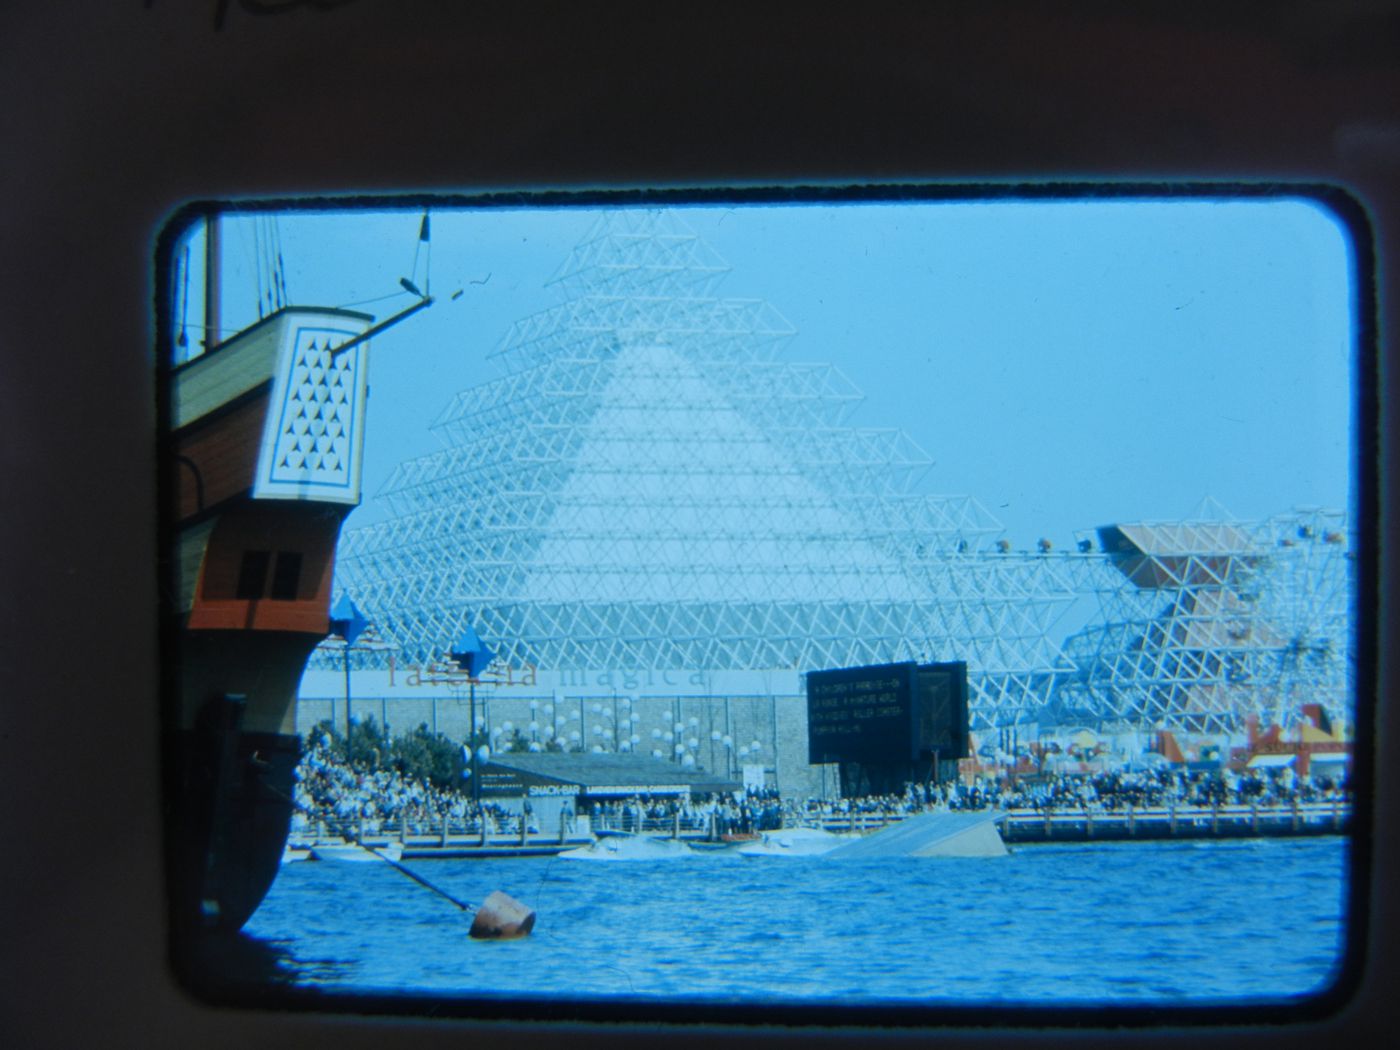 View of the Gyrotron at La Ronde, Expo 67, Montréal, Québec